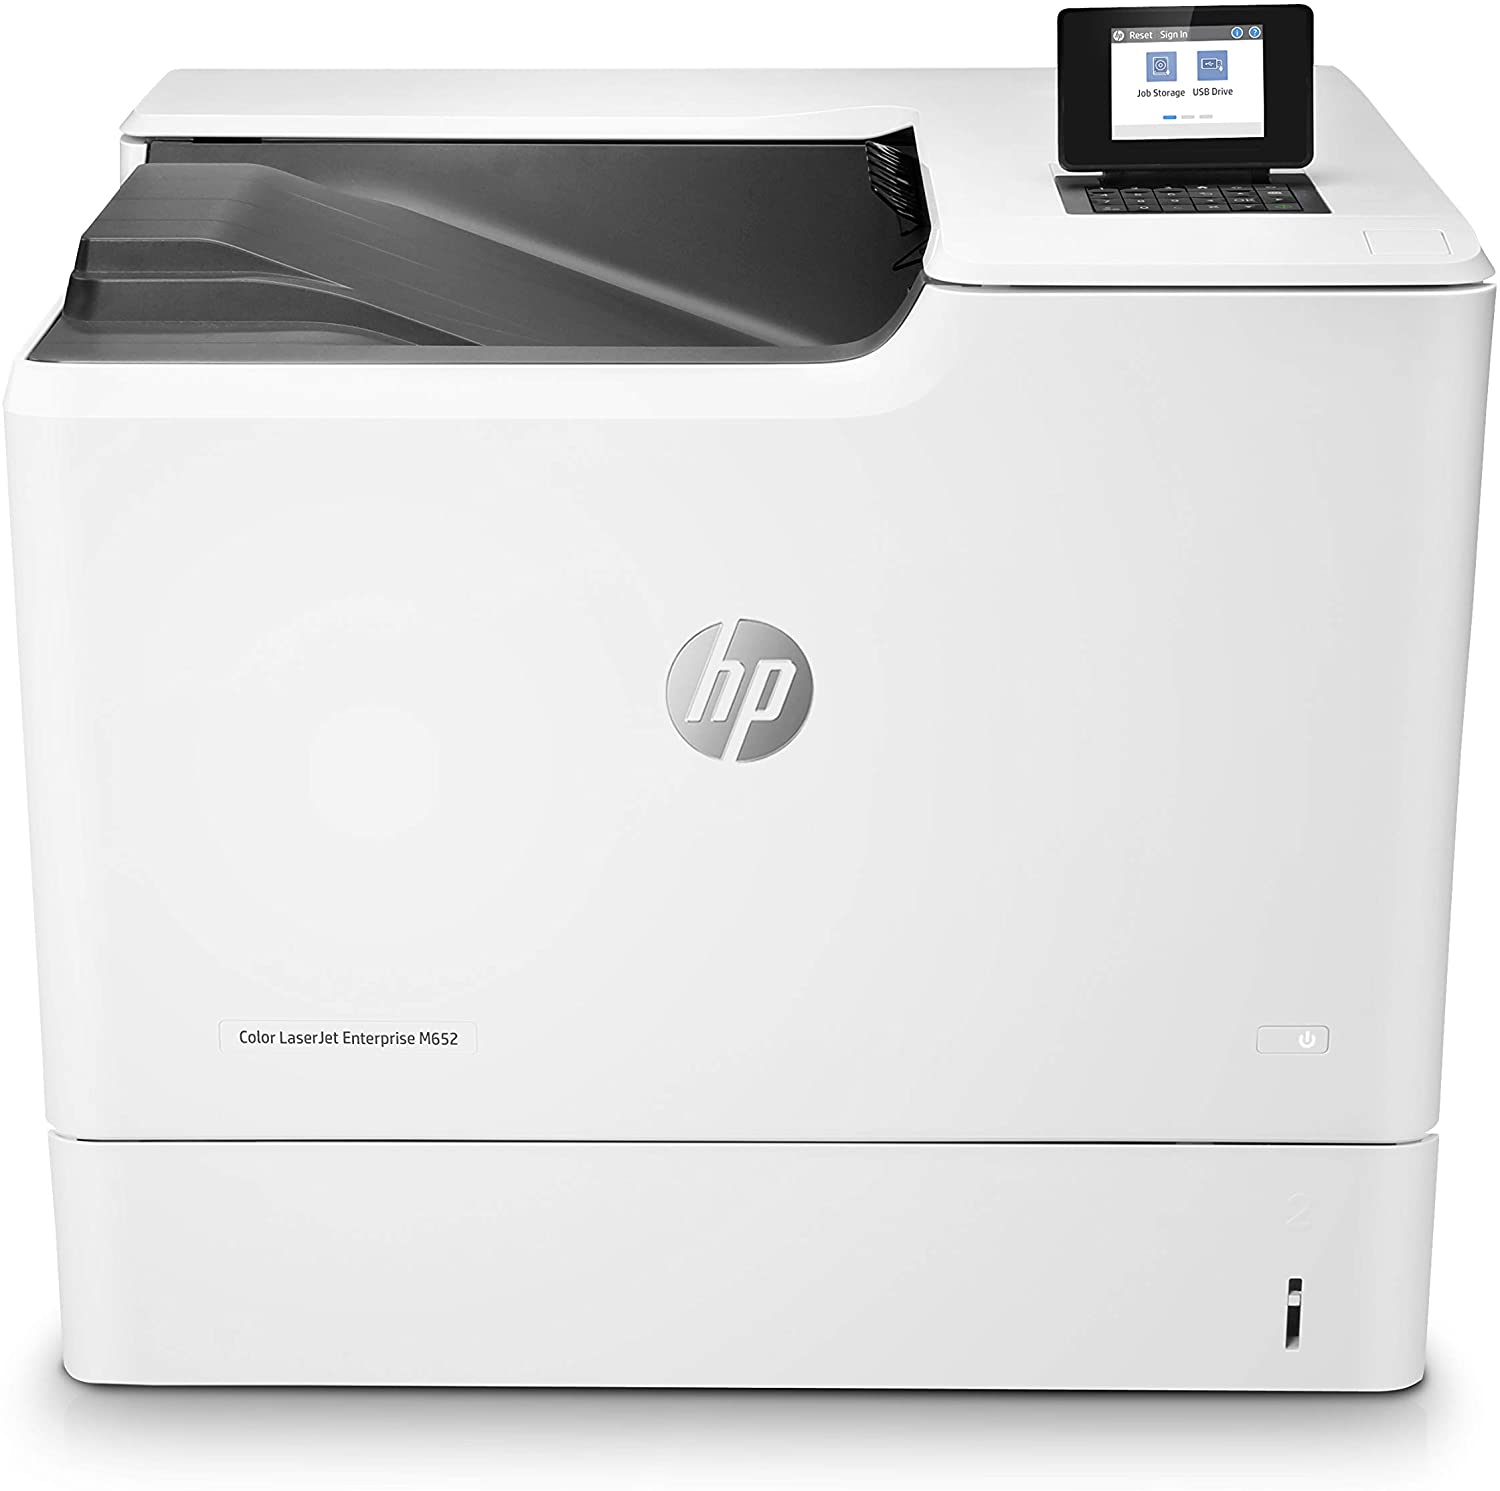 HP Color LaserJet Enterprise M652 AC 220- 240V Printer for HP 655A J7Z99A